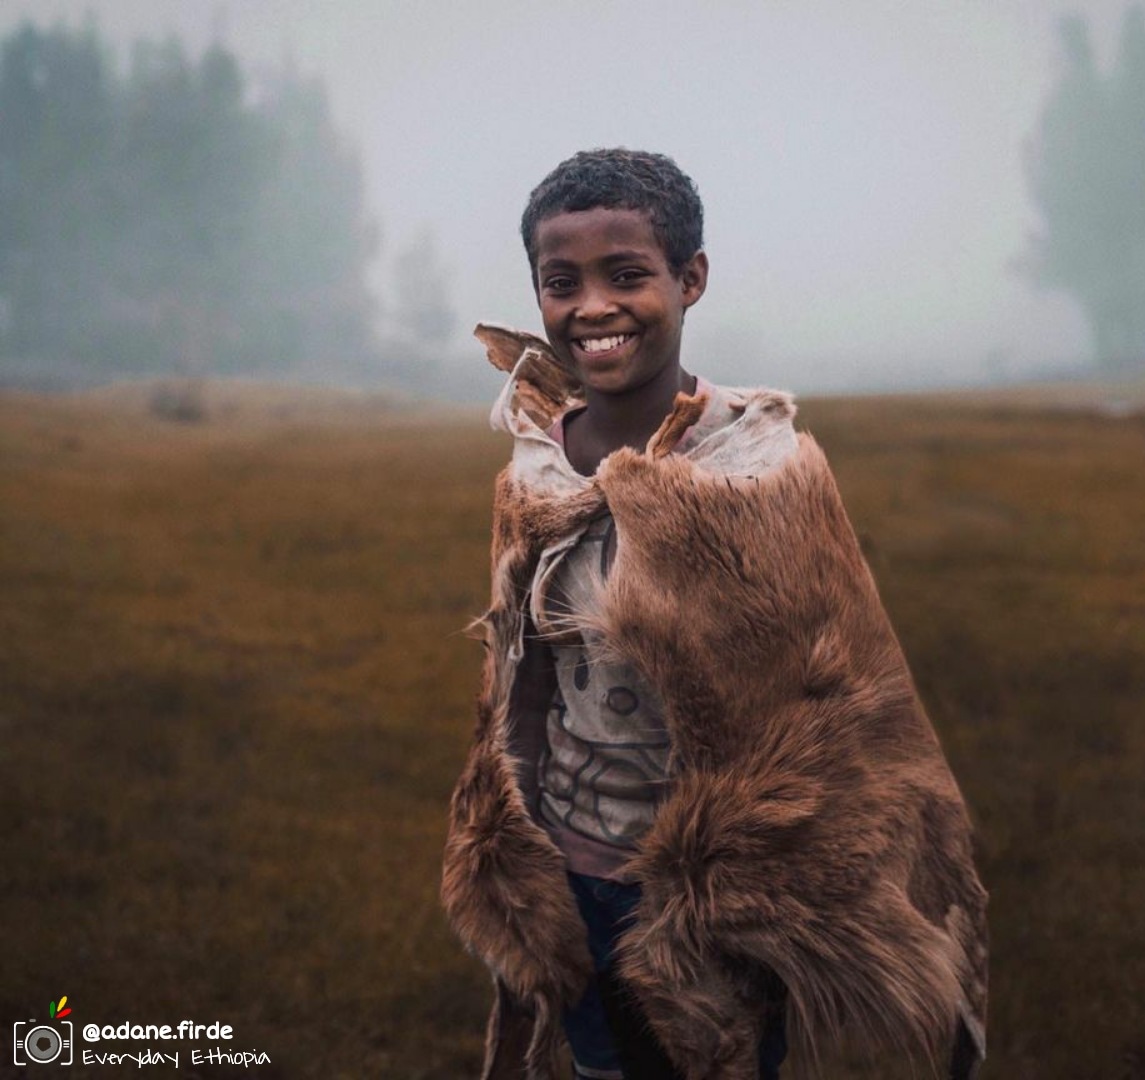 ⛺🐑 𝔼𝕣𝕞𝕚𝕒𝕤 - 𝙩𝙝𝙚 𝙎𝙝𝙚𝙥𝙝𝙚𝙧𝙙🧒🏾⛰️ ιи тнє fιєℓ∂ѕ #DailyLife, 📸 #Debrelibanos || #Ethiopia 🇪🇹 °°°   Follow ➡️ @EverydayEthio ⬅️ 💯 #habesha #EverydayEthiopia #portraitart (Credits: @adane.firde)